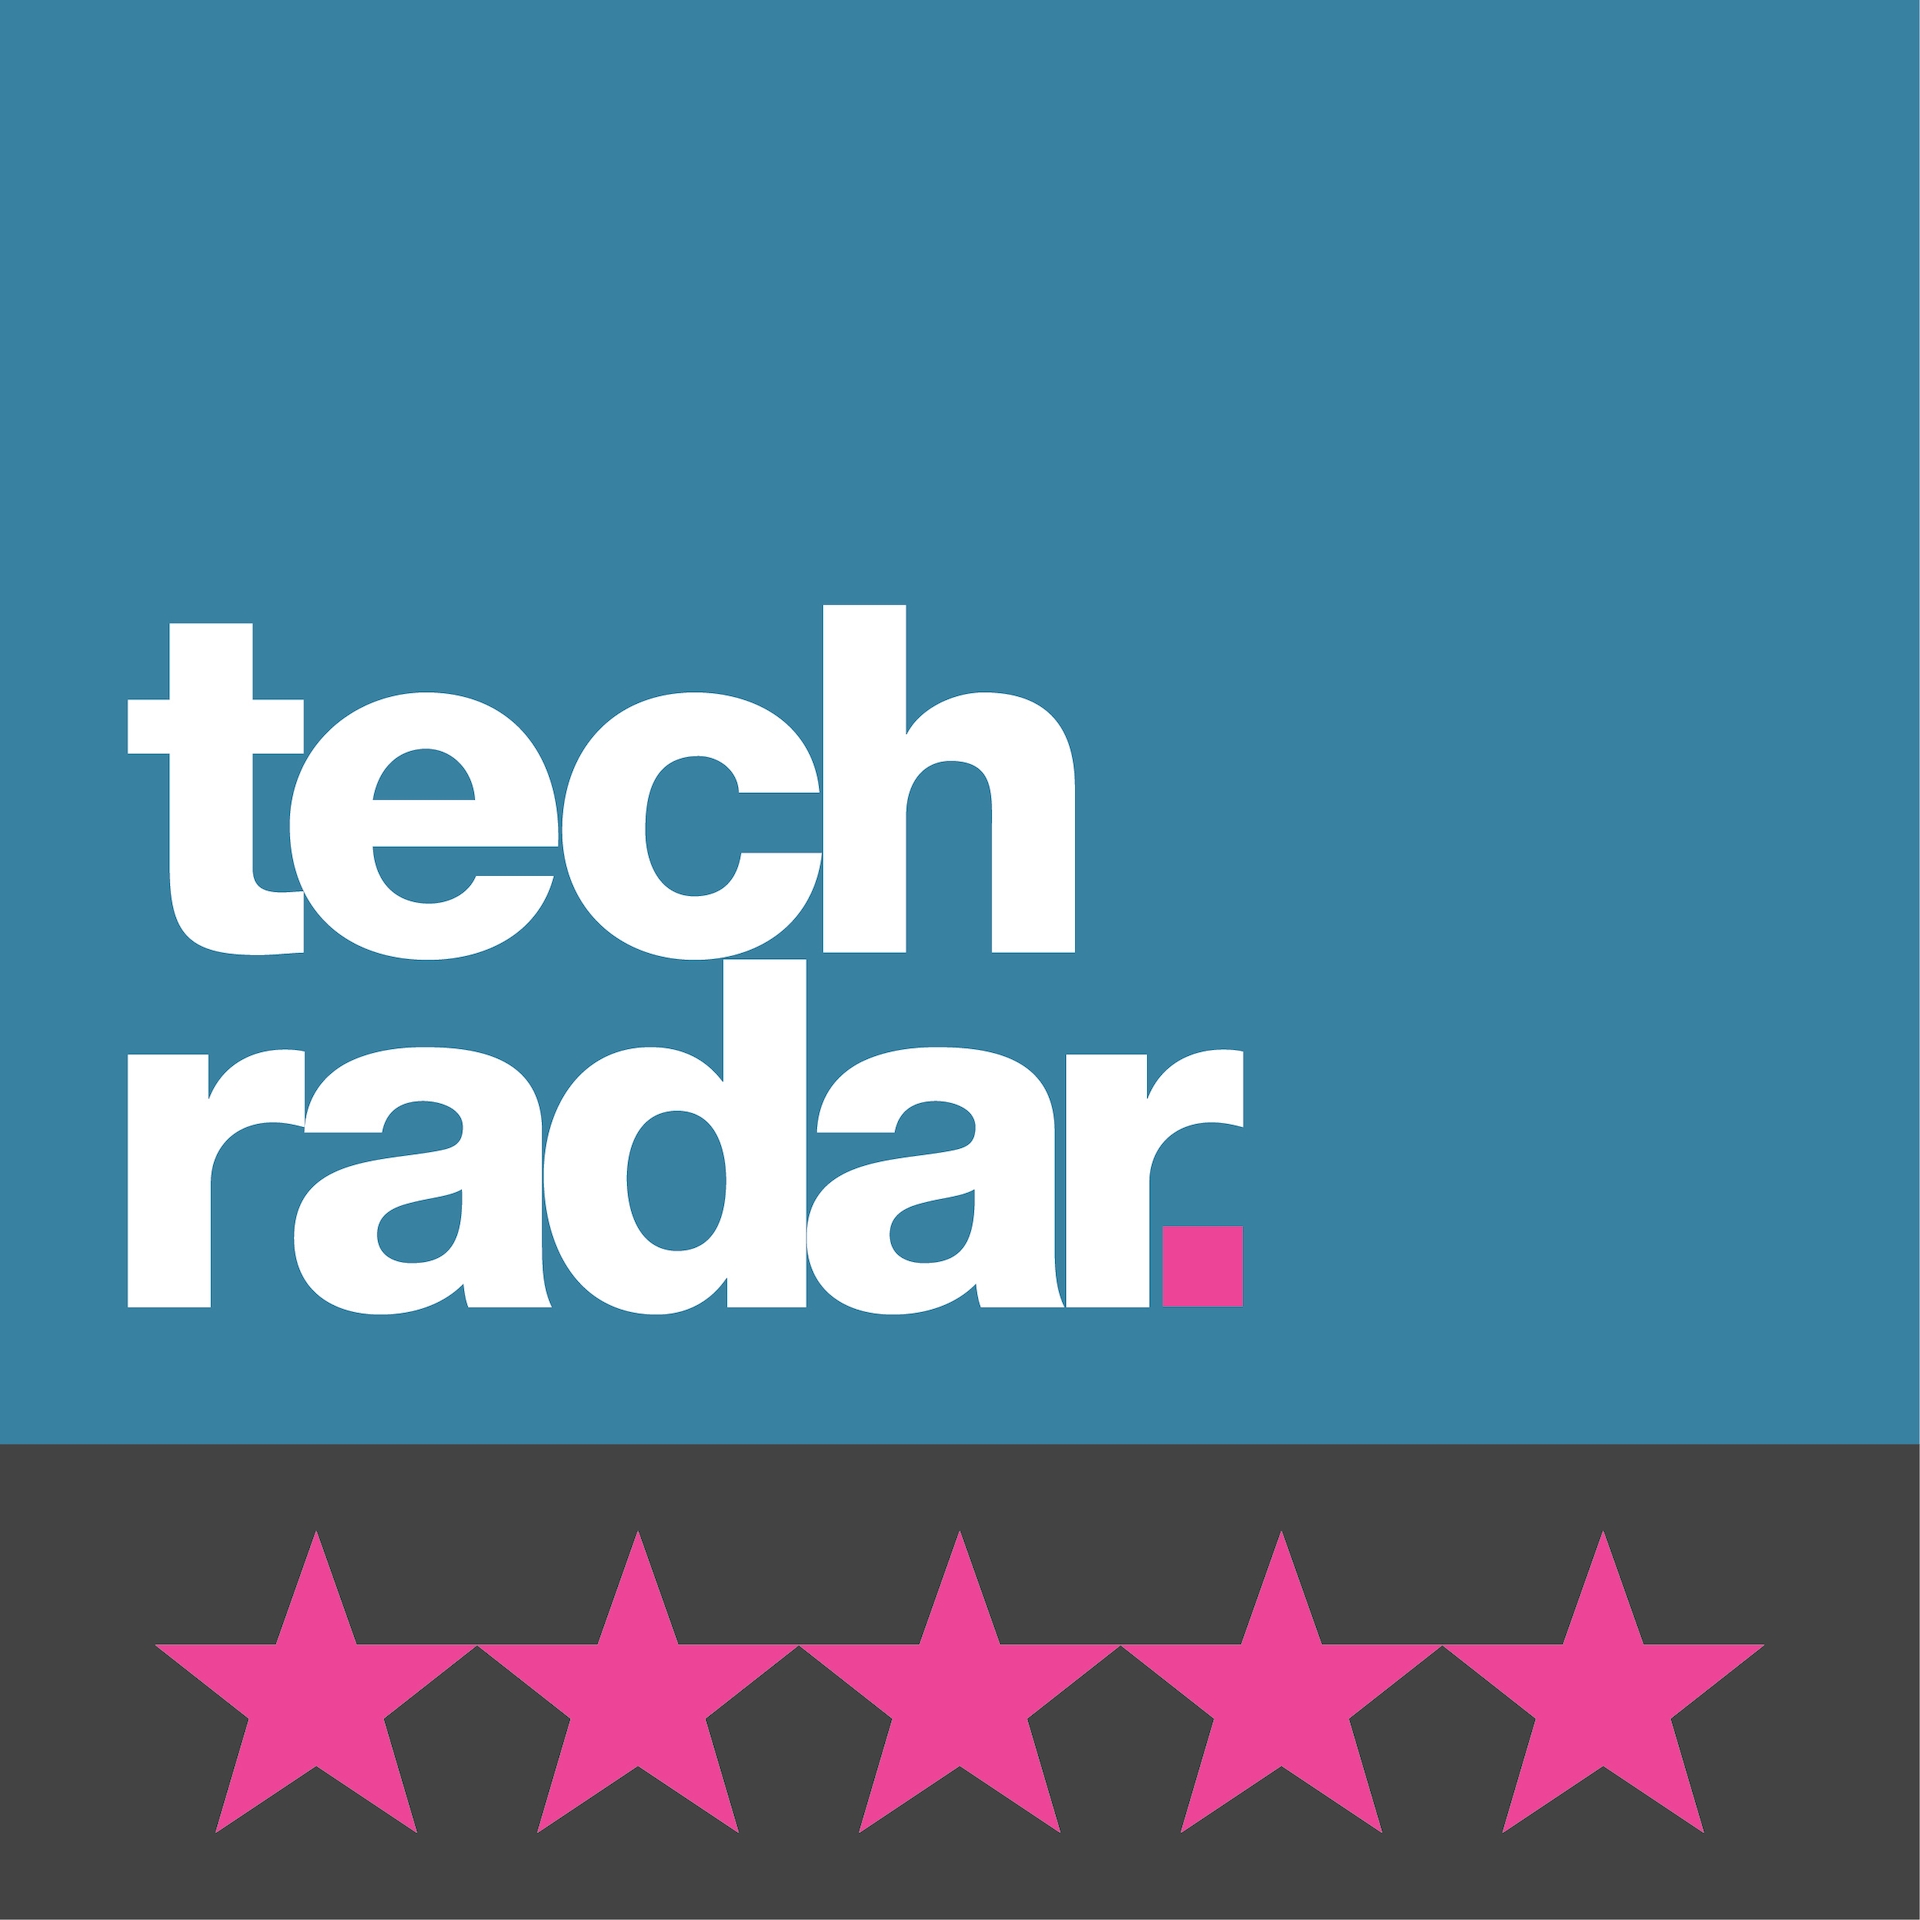 TechRadar 5 stars